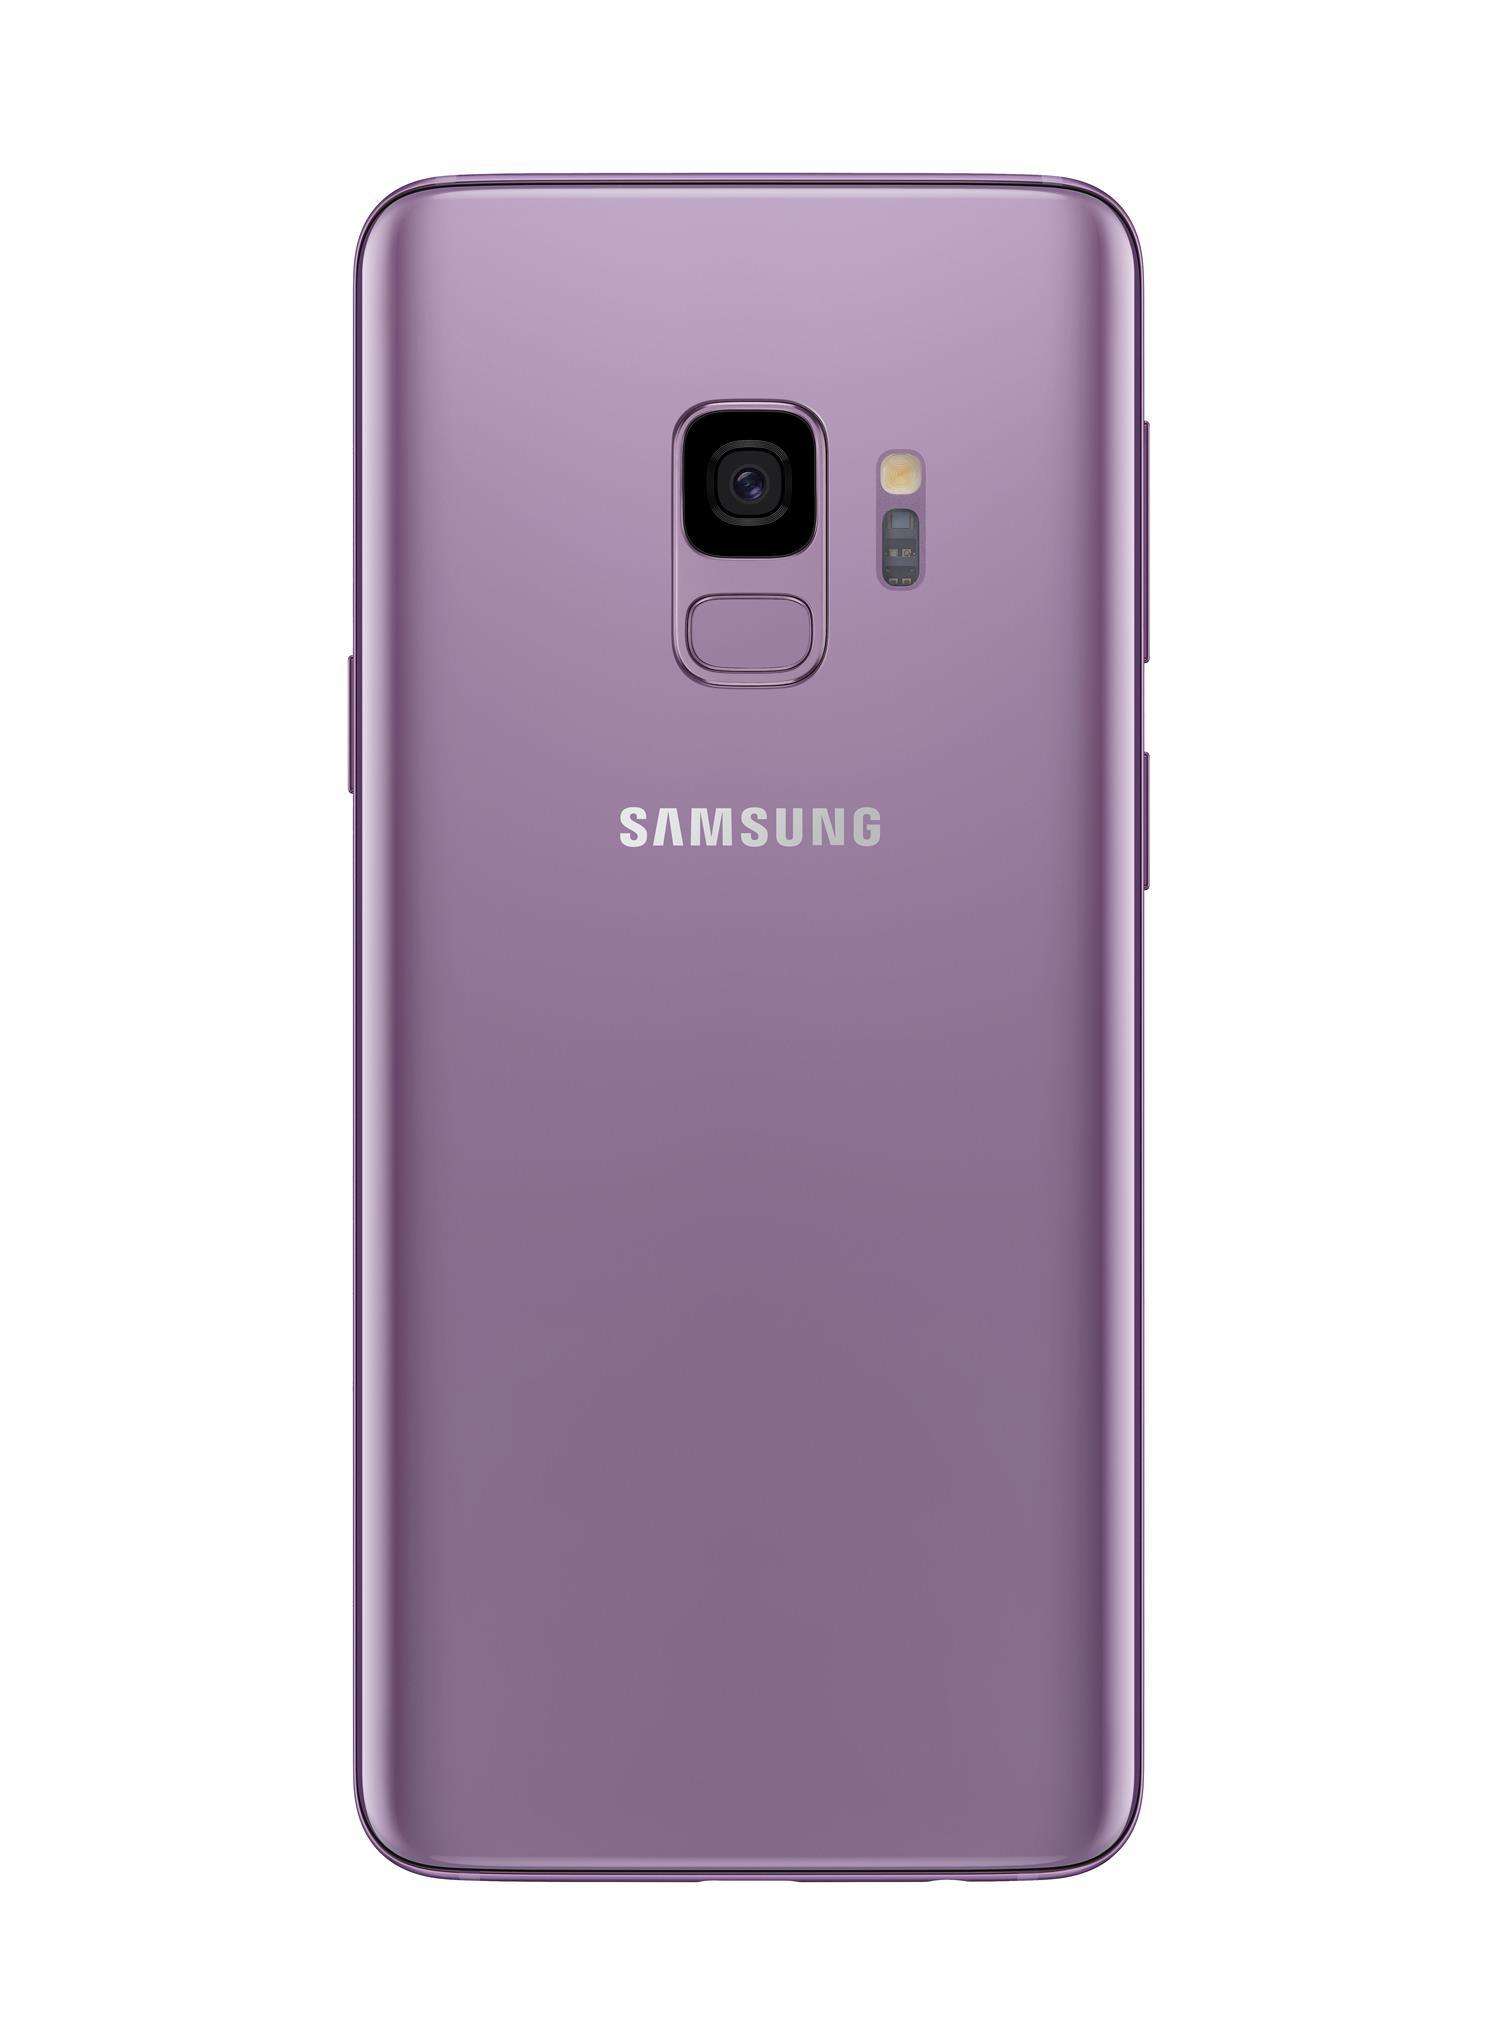 Samsung Galaxy S9 स्मार्टफोन को एंड्रॉयड पाई अपडेट मिला